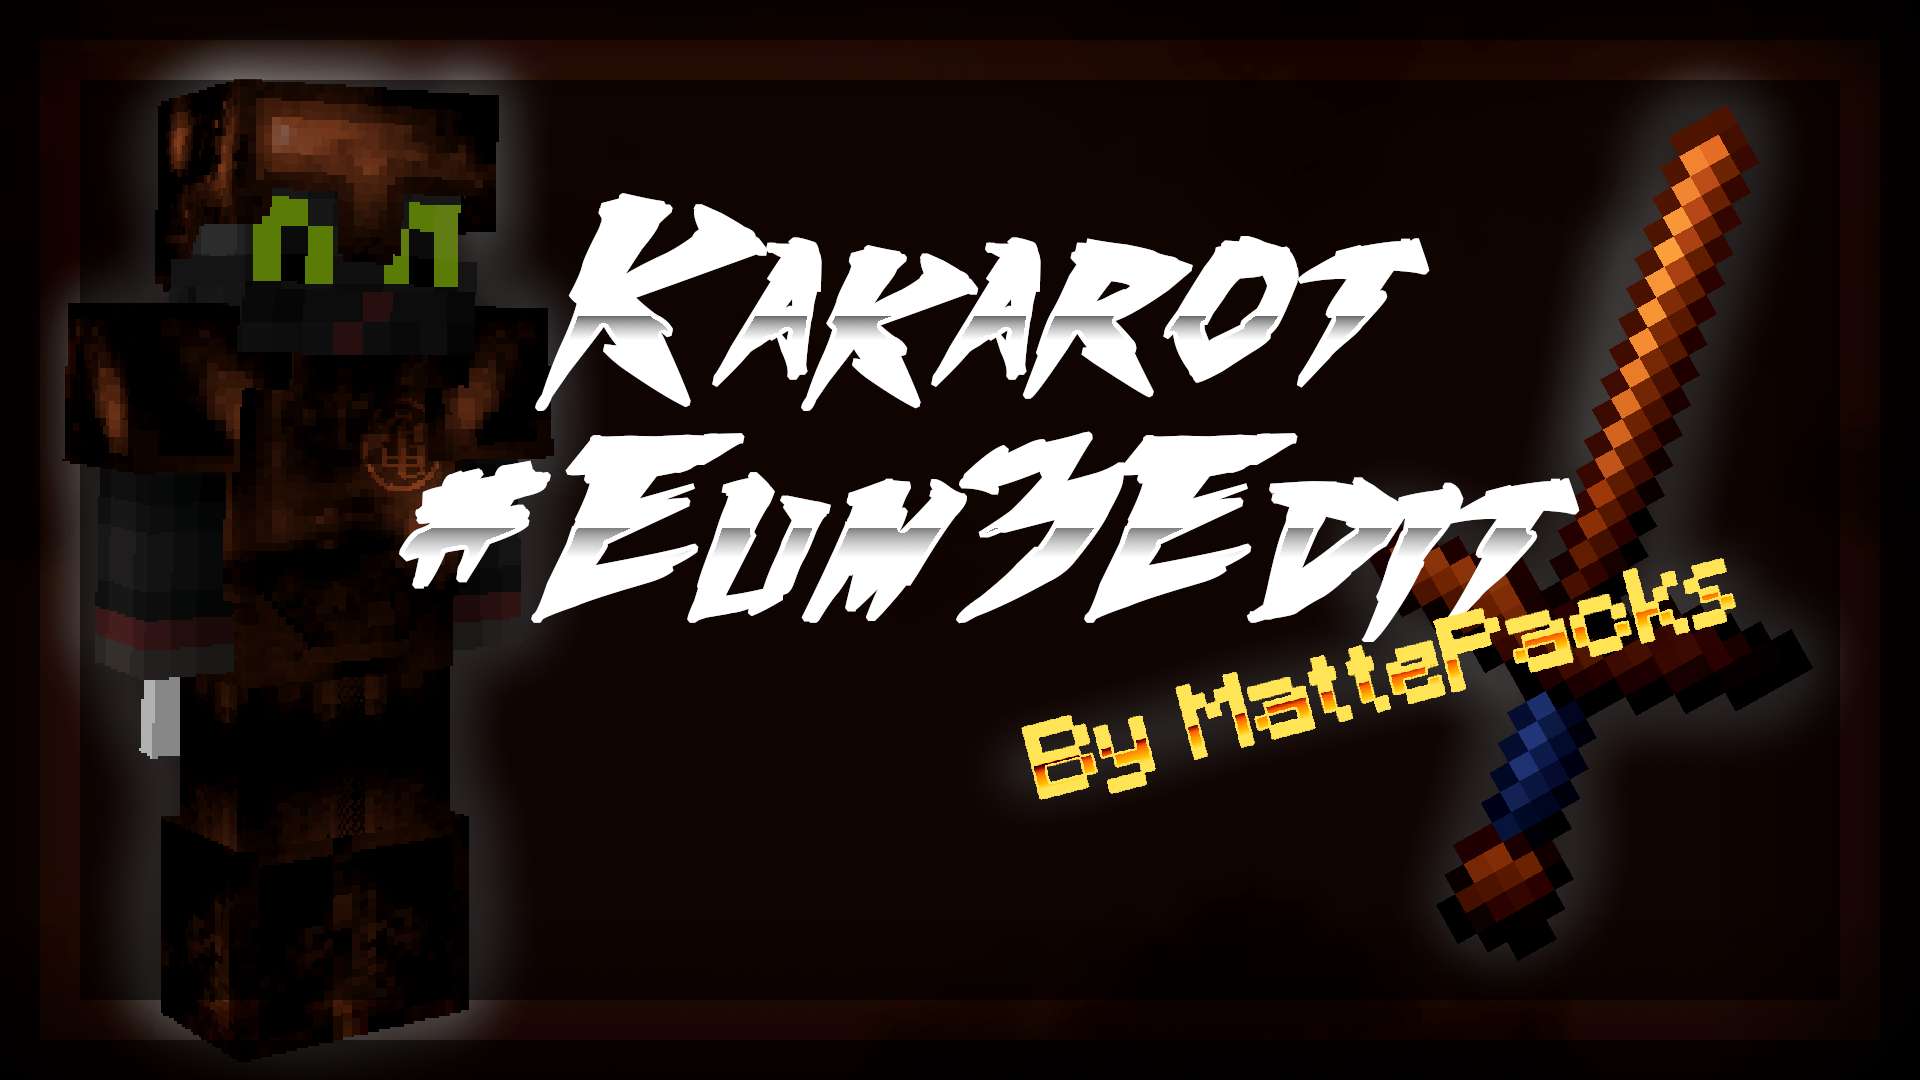 Kakarot #Eum3Edit 32x by MattePacks on PvPRP